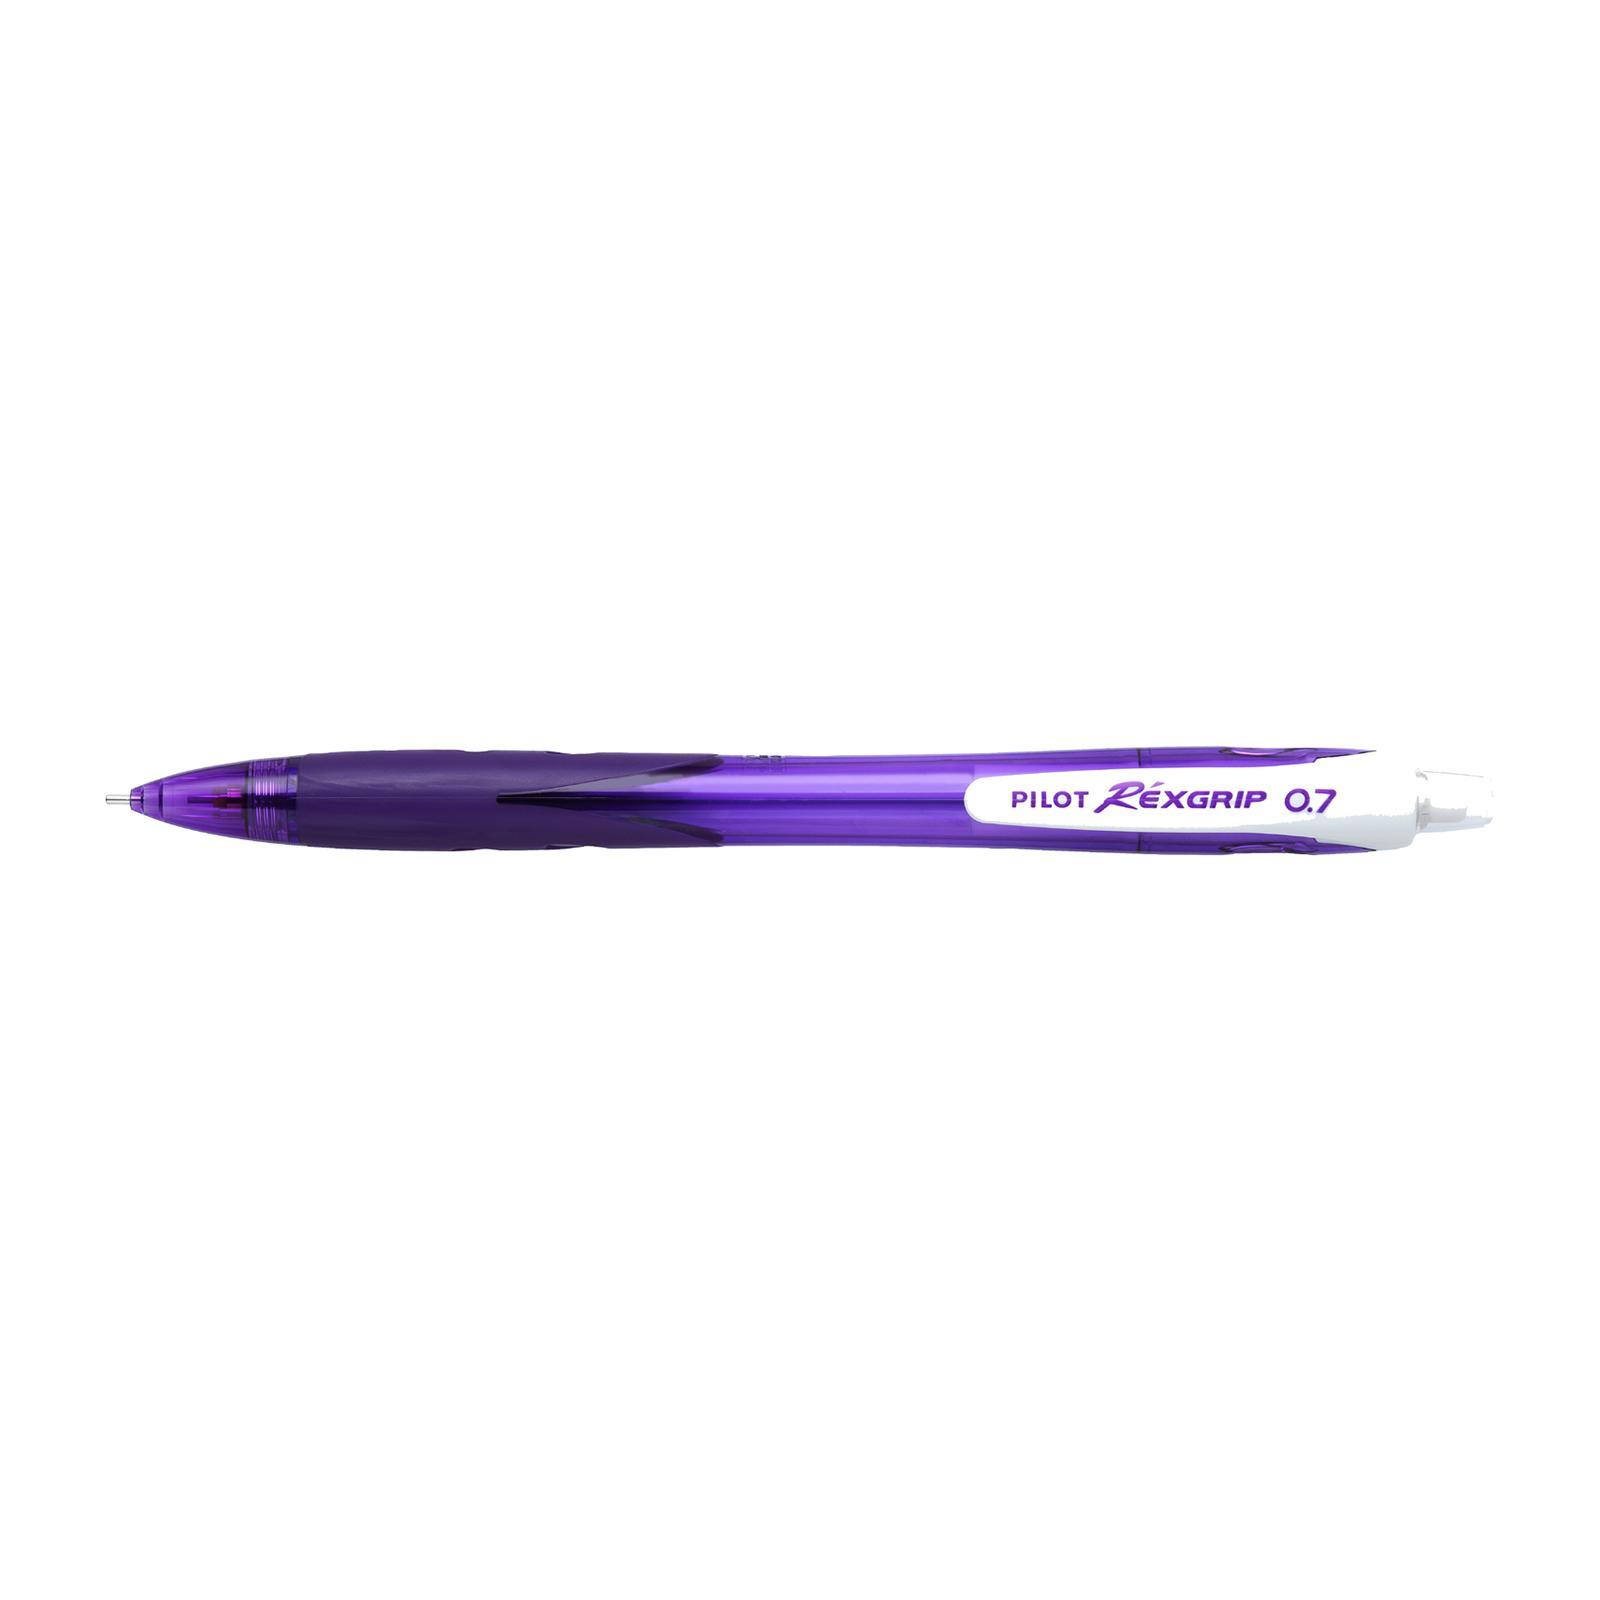 Pilot Rexgrip Mechanical pencil 0.5mm Purple Body H-105 